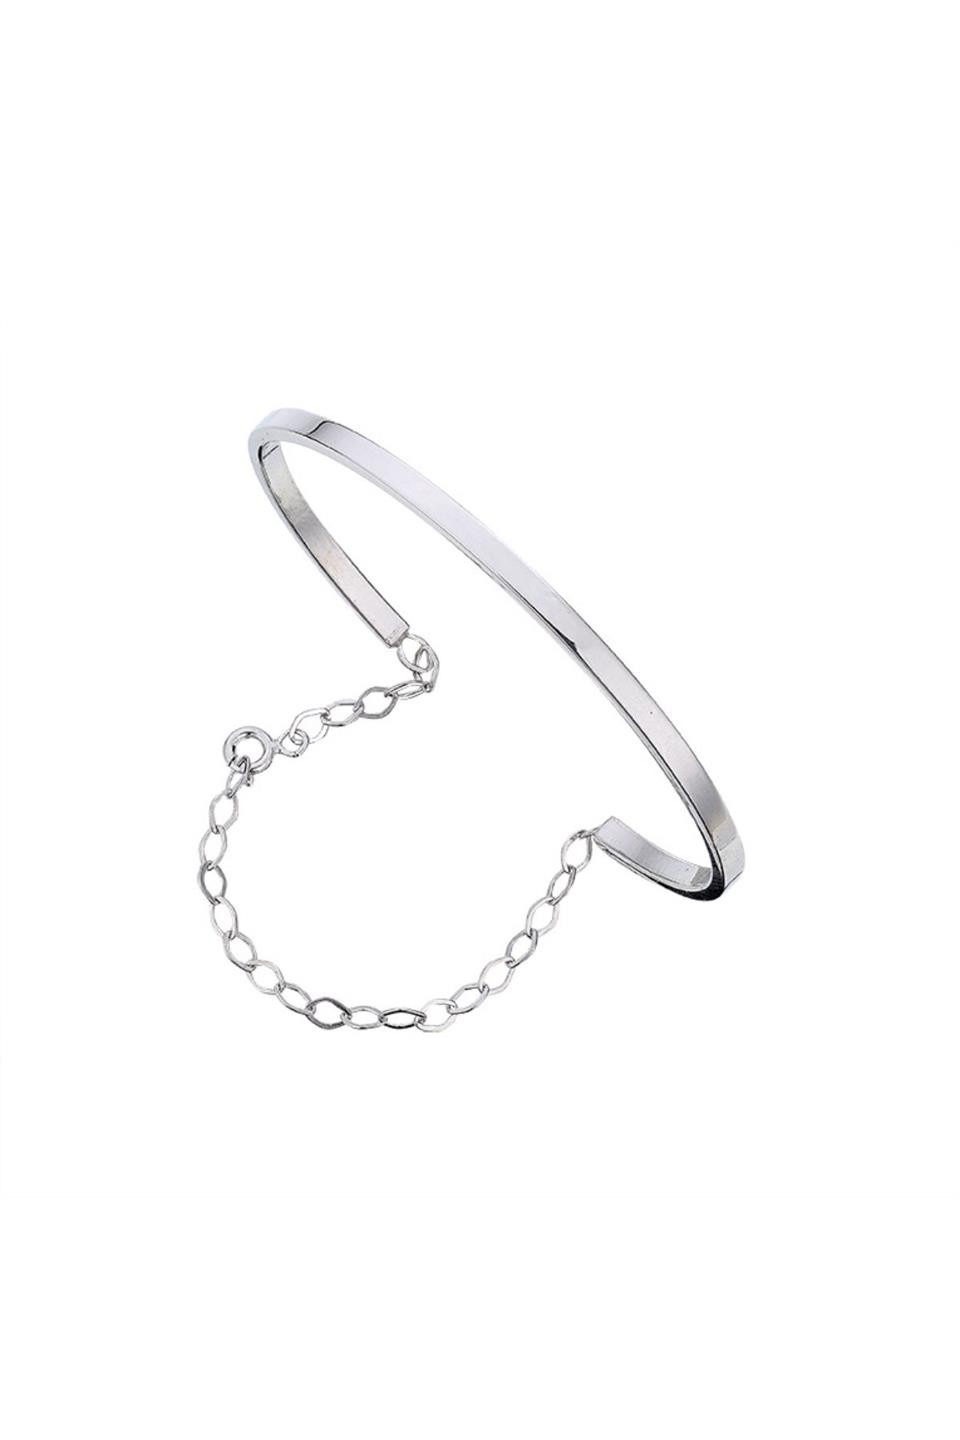 Motto personalizable bracelet - Silver